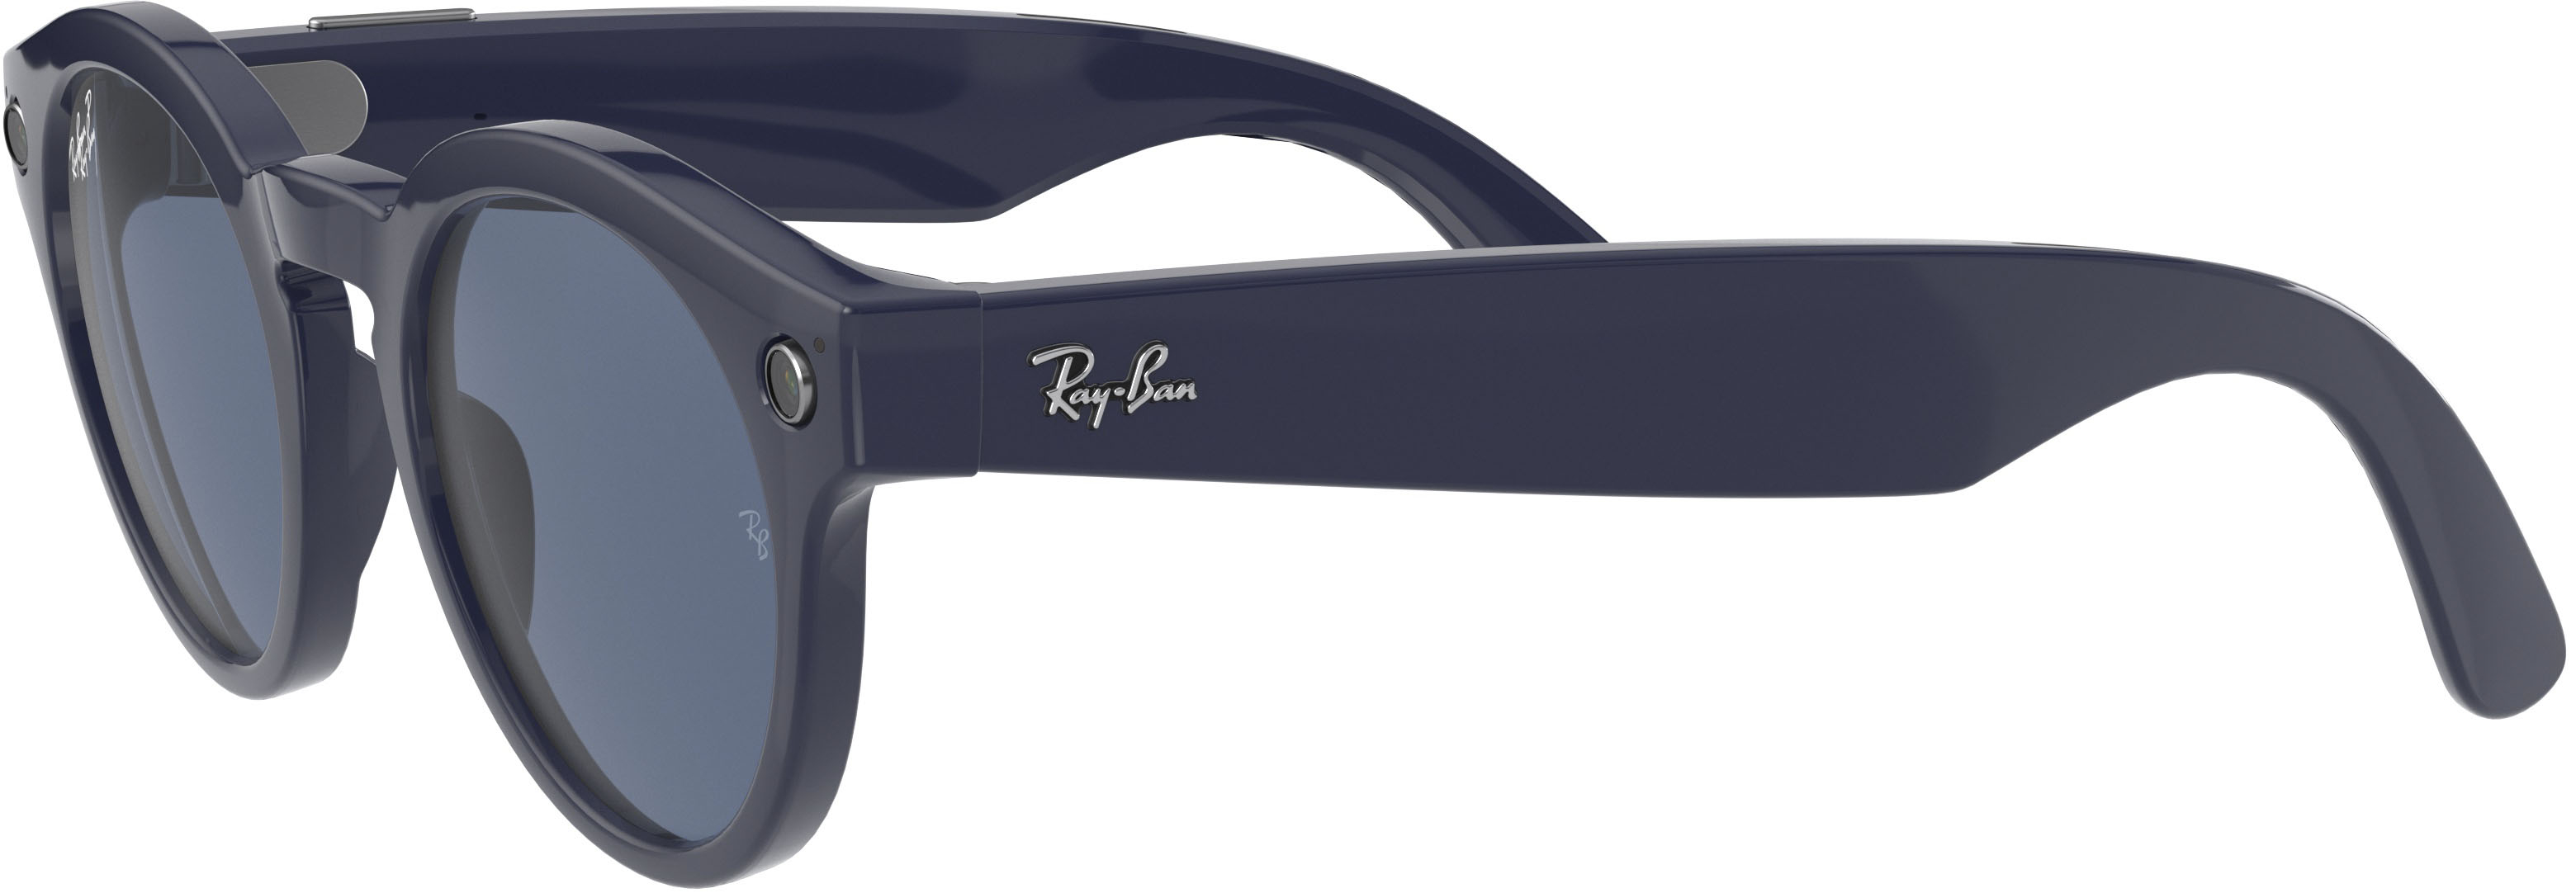 Left View: Ray-Ban - Stories Round Smart Glasses - Shiny Blue/Dark Blue Polarized